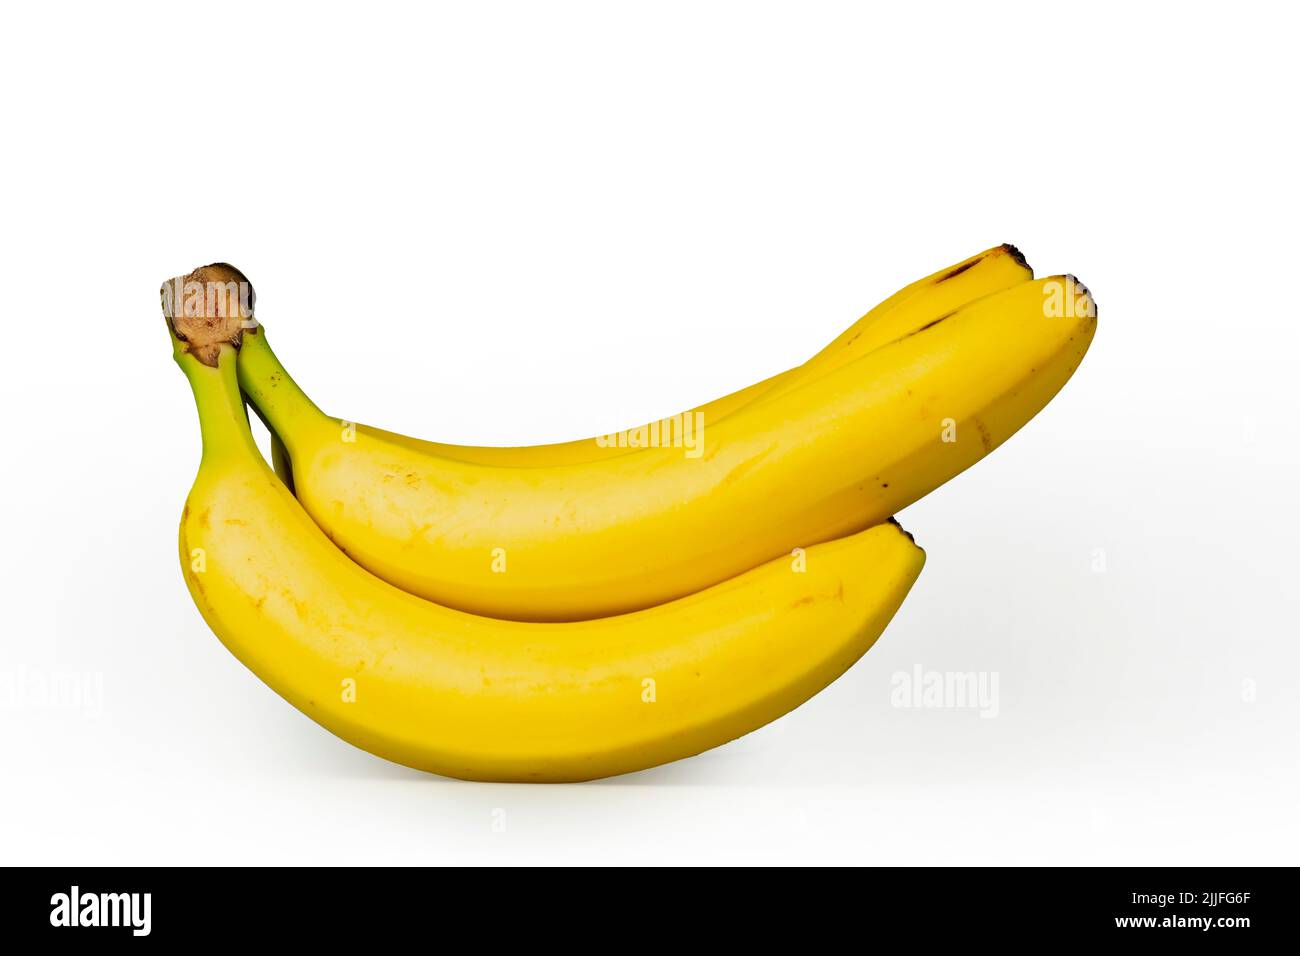 Bunch of fresh bananas isolated on white background - stock photo Stock Photo